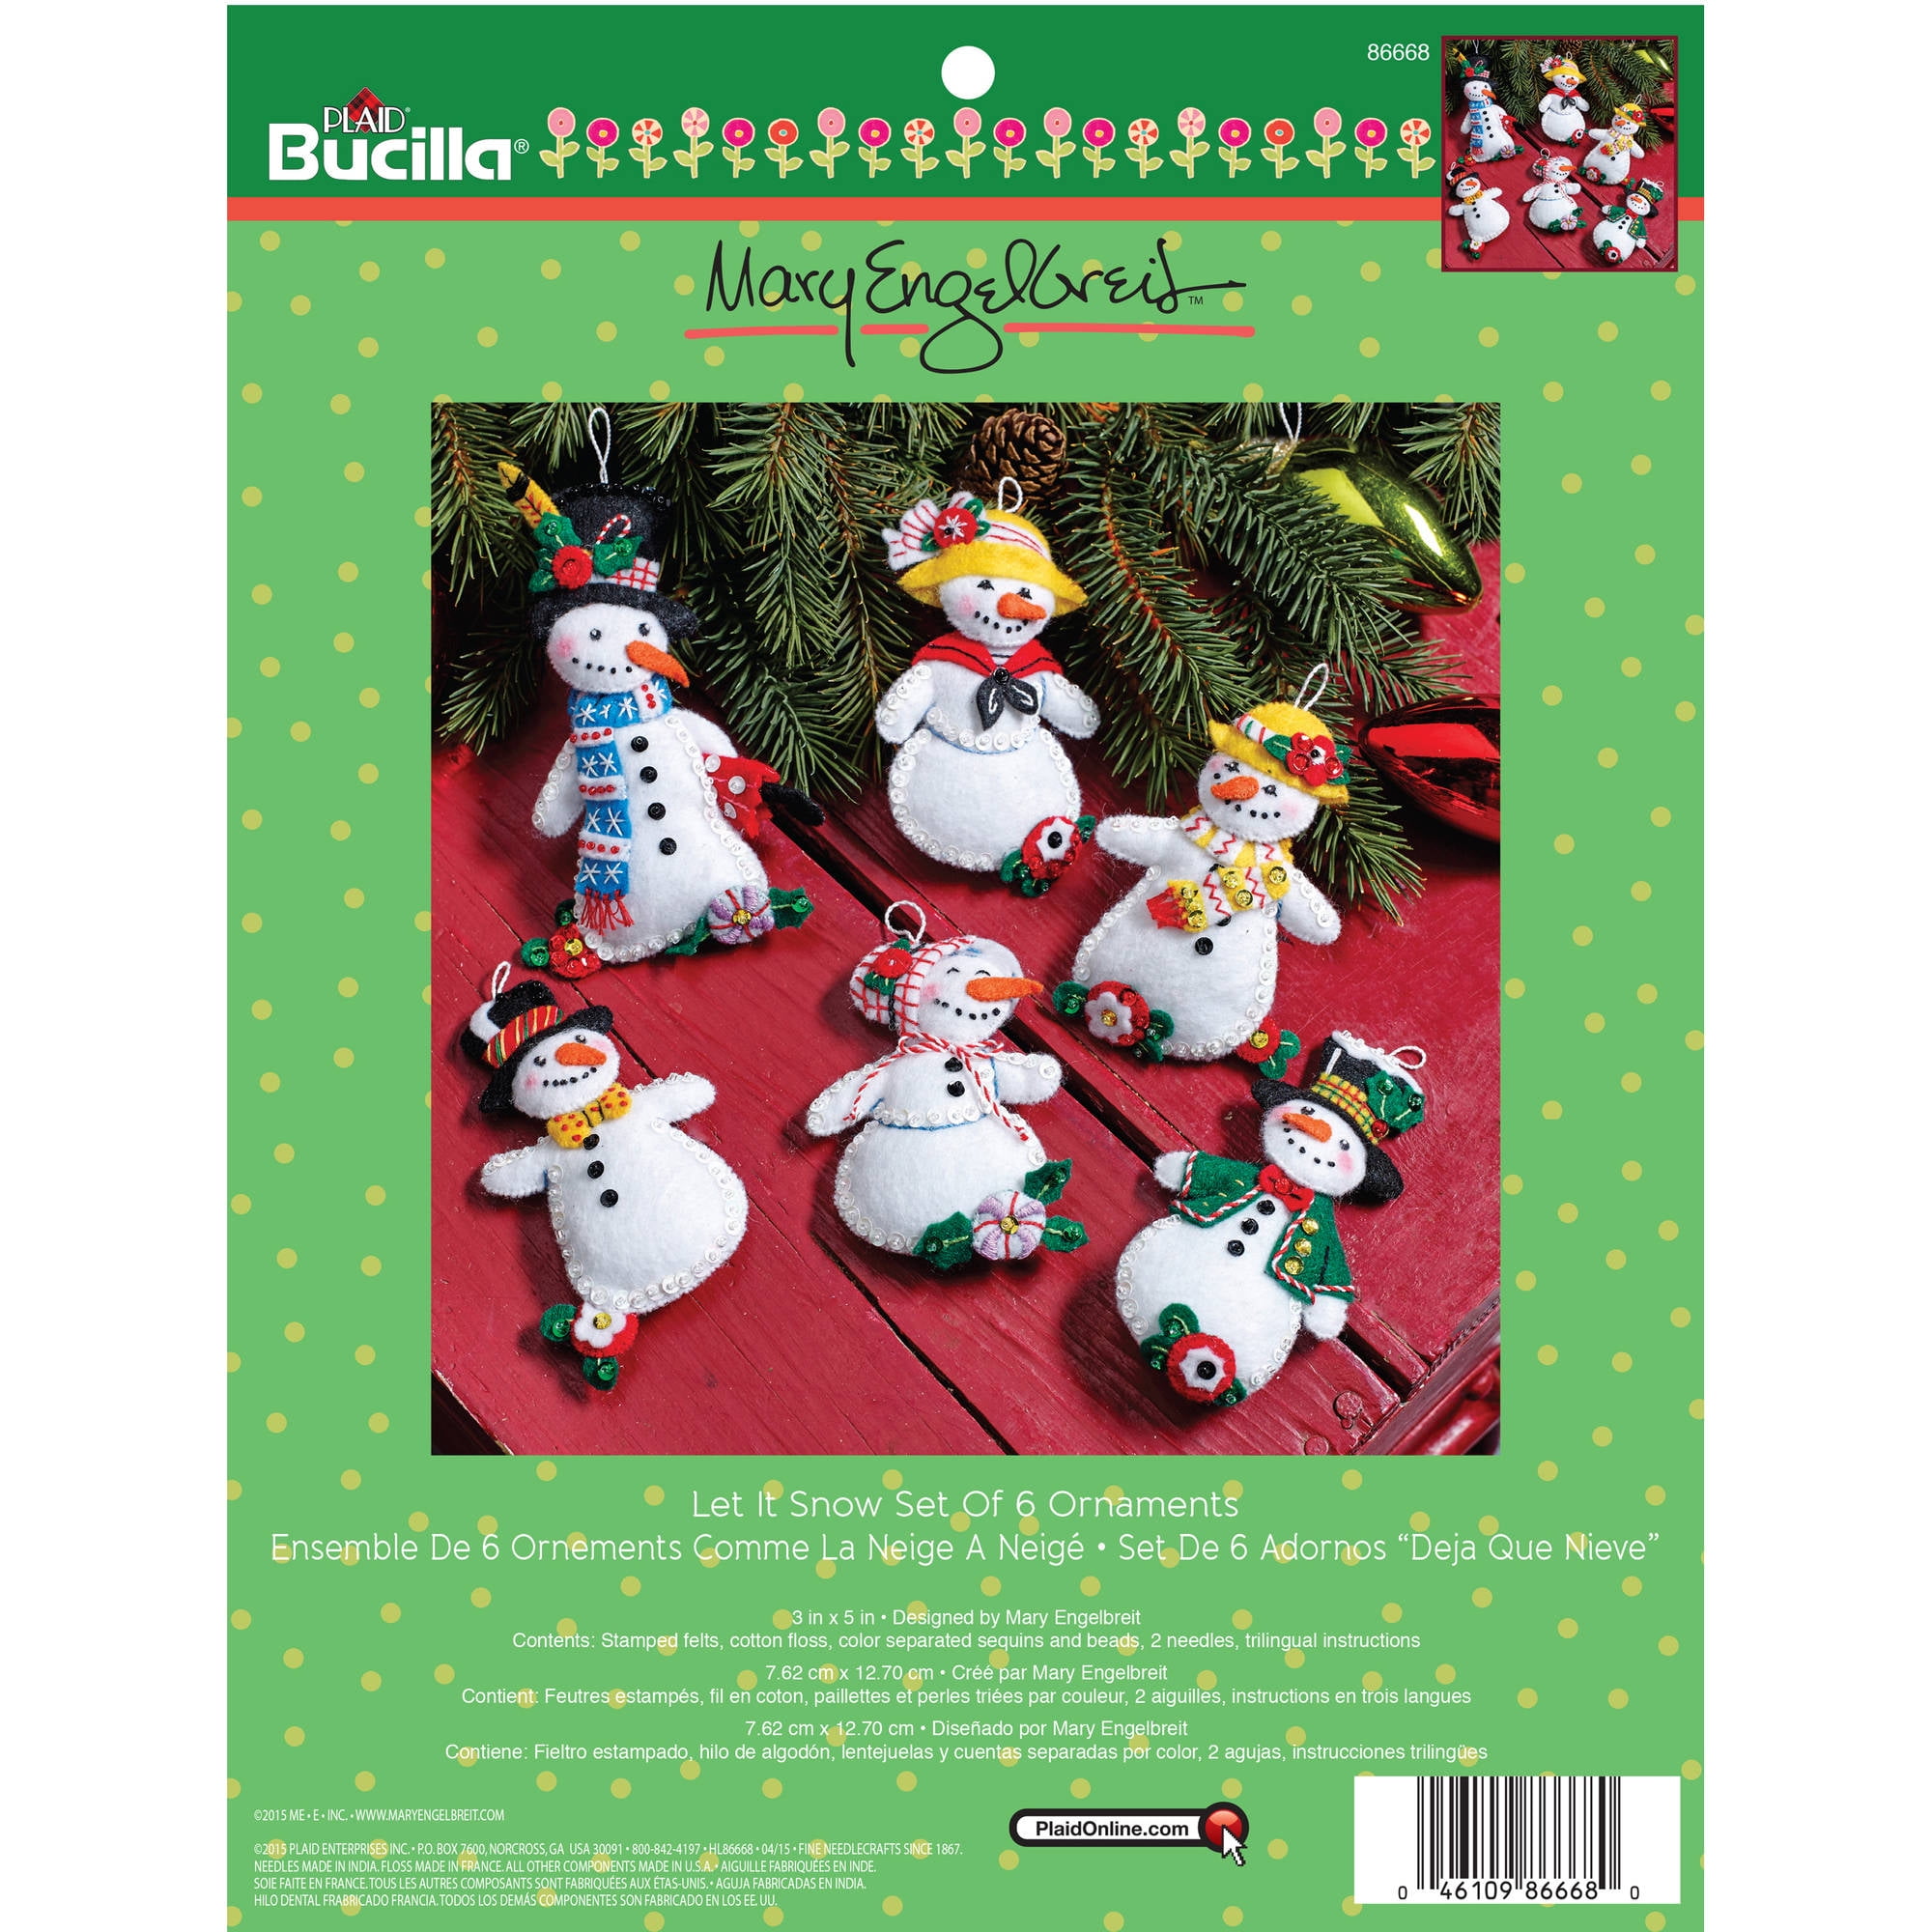 Shop Plaid Bucilla ® Seasonal - Felt - Ornament Kits - Classic